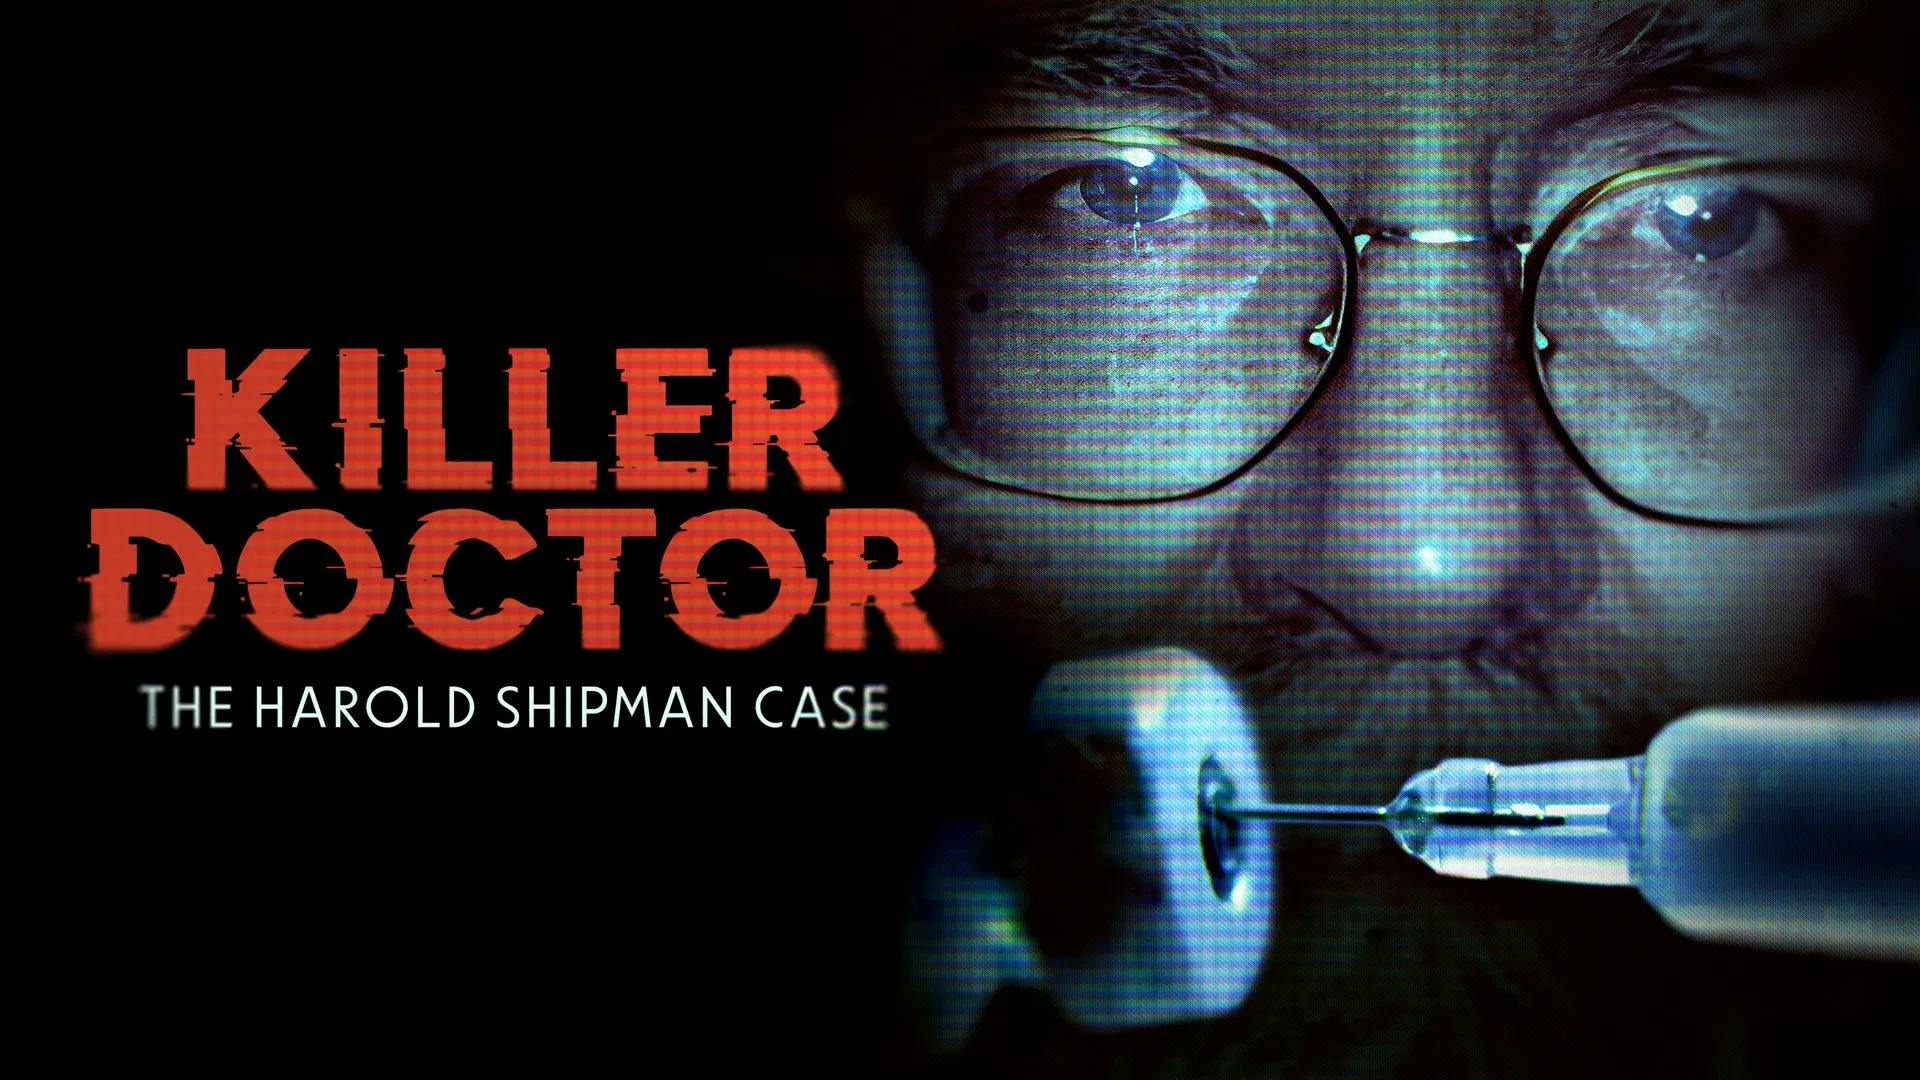 Killer Doctor: The Harold Shipman Case